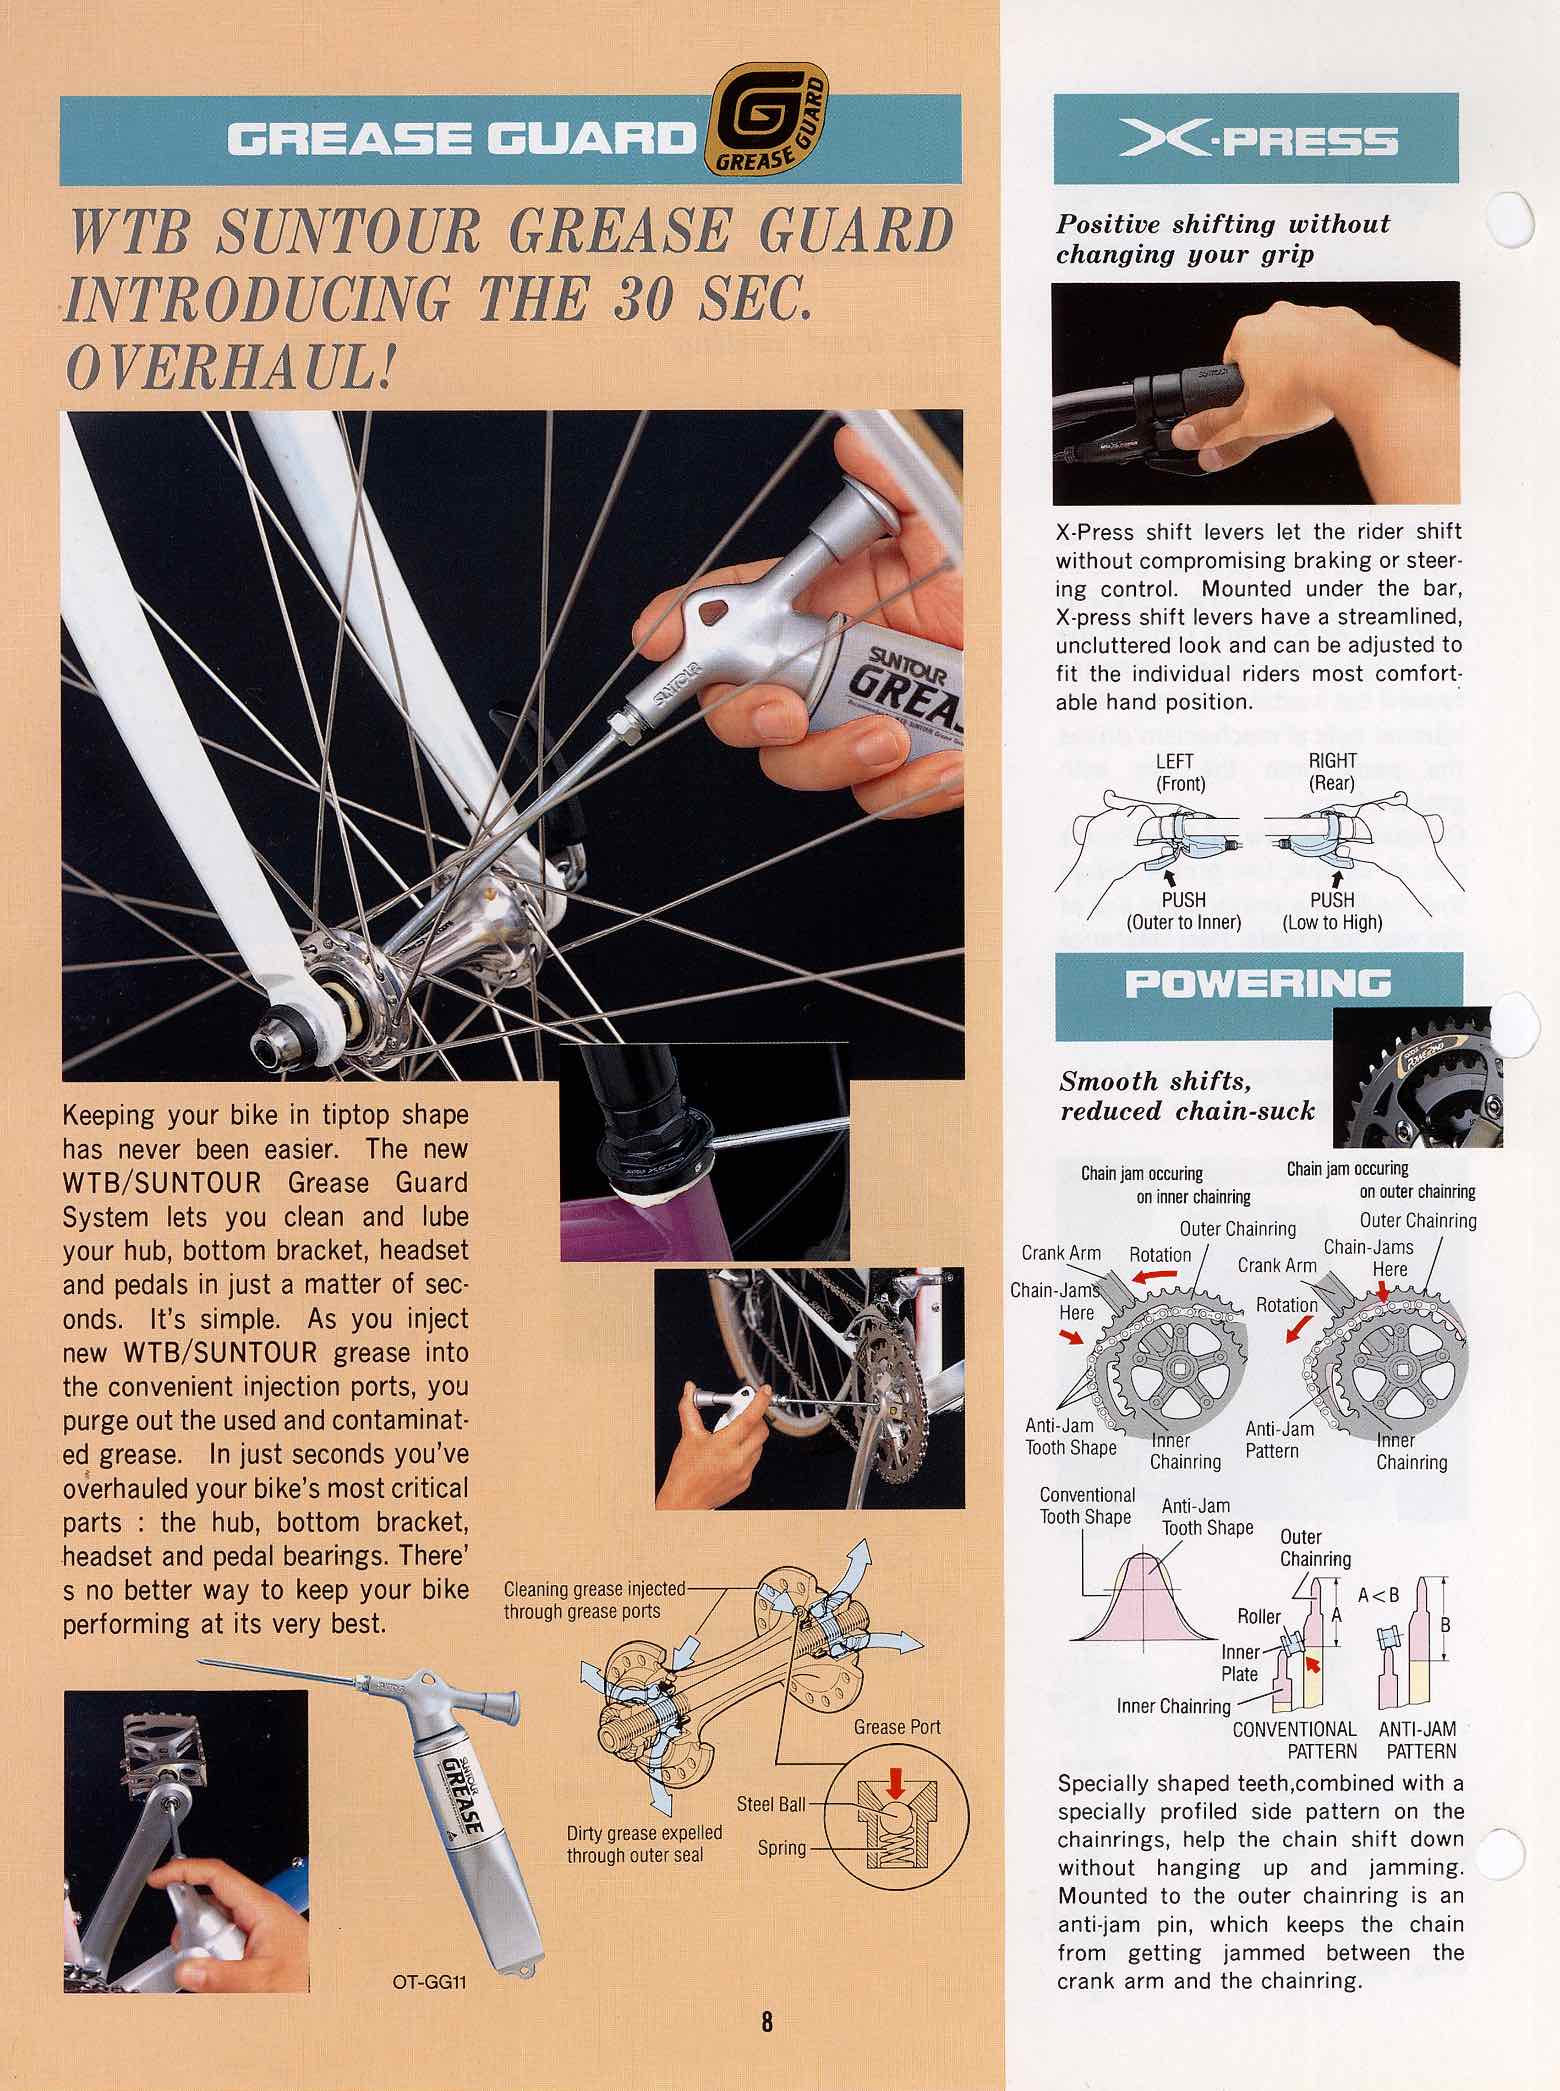 SunTour Bicycle Equipment Catalog 1992 - Page 8 main image